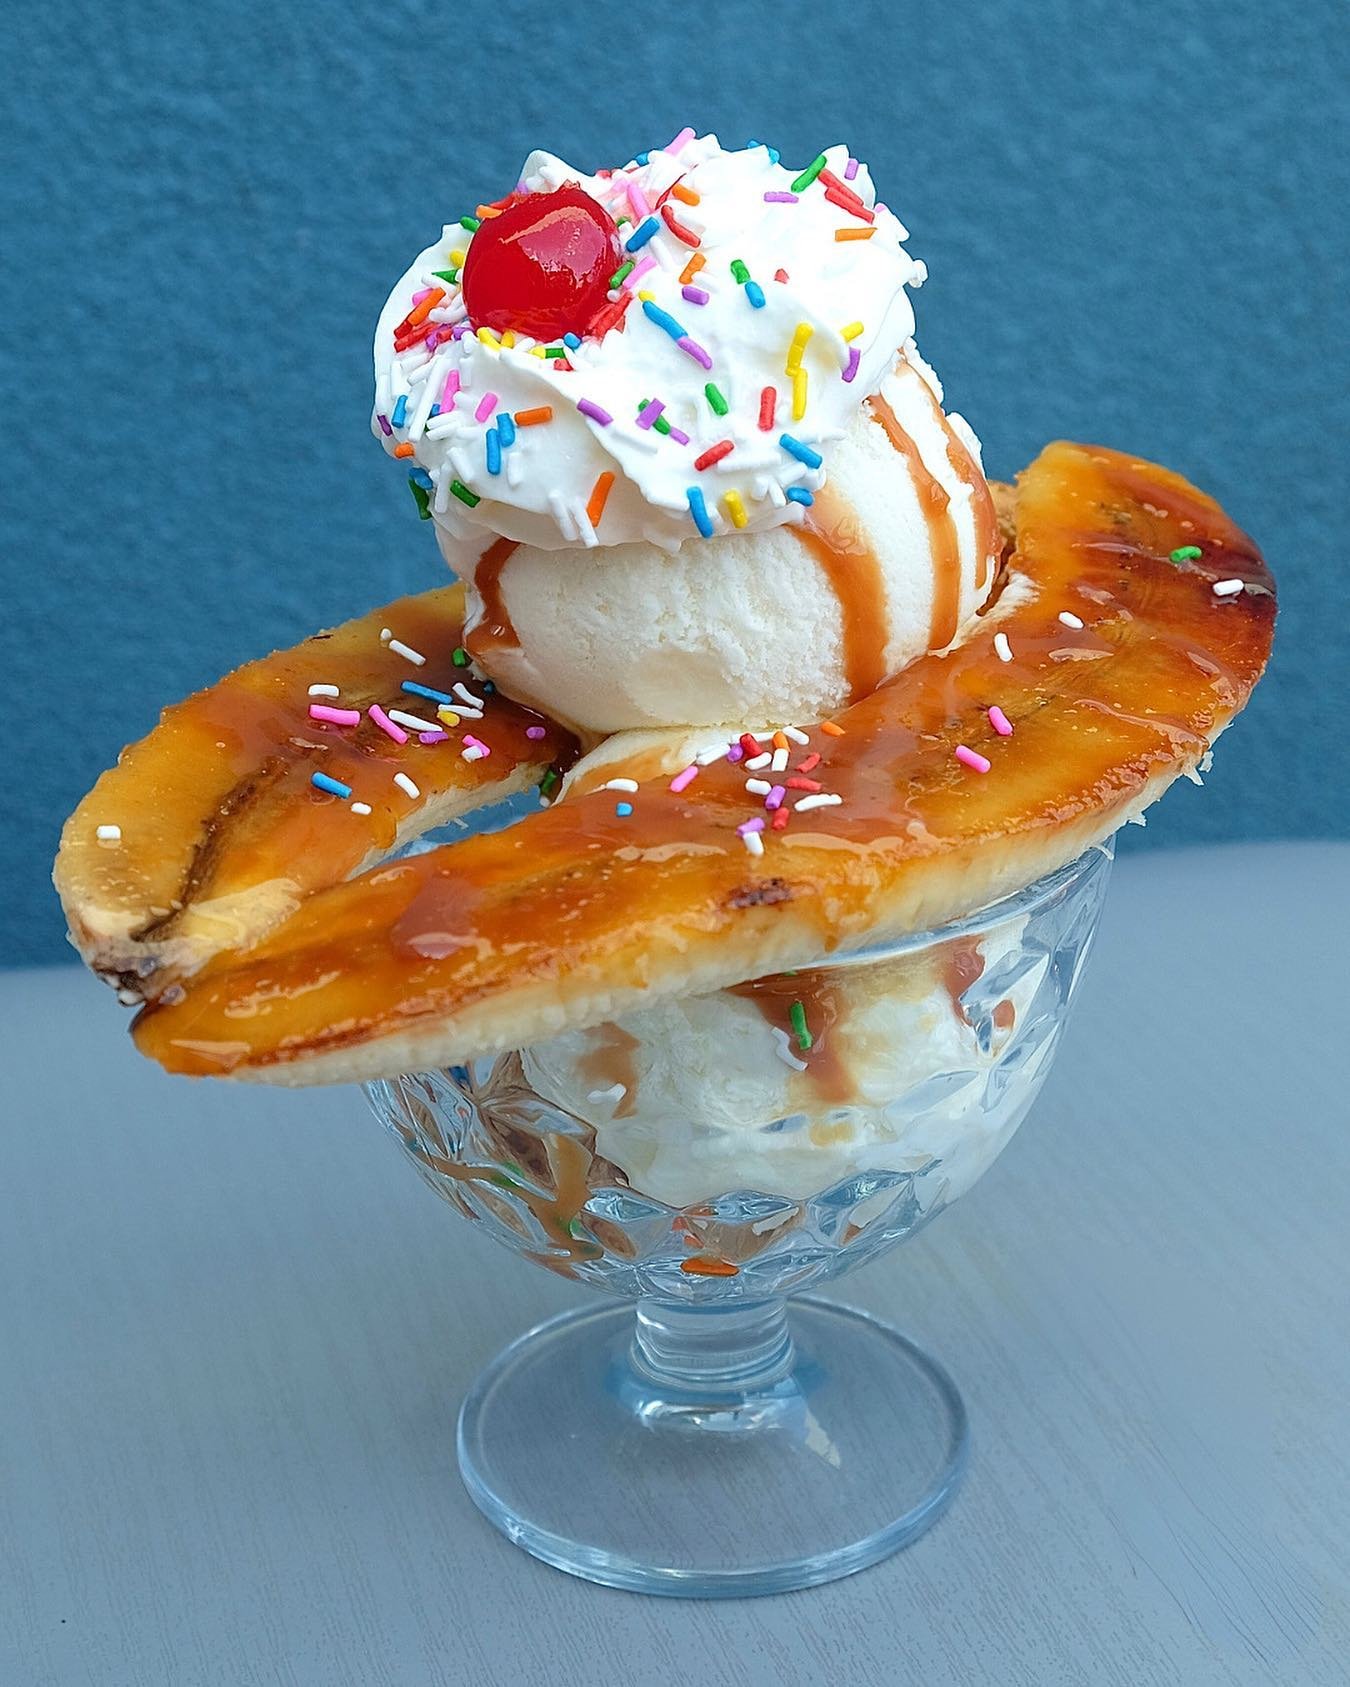 NEW DESSERT ALERT!‼️

🍌BR&Ucirc;L&Eacute;E BANANA SPLIT🍦
ice cream, crumbled biscuit, whipped cream, sprinkles 🎊

#patoistoronto #yum #dessert #bananasplit #brulee #torontoeats #icecream